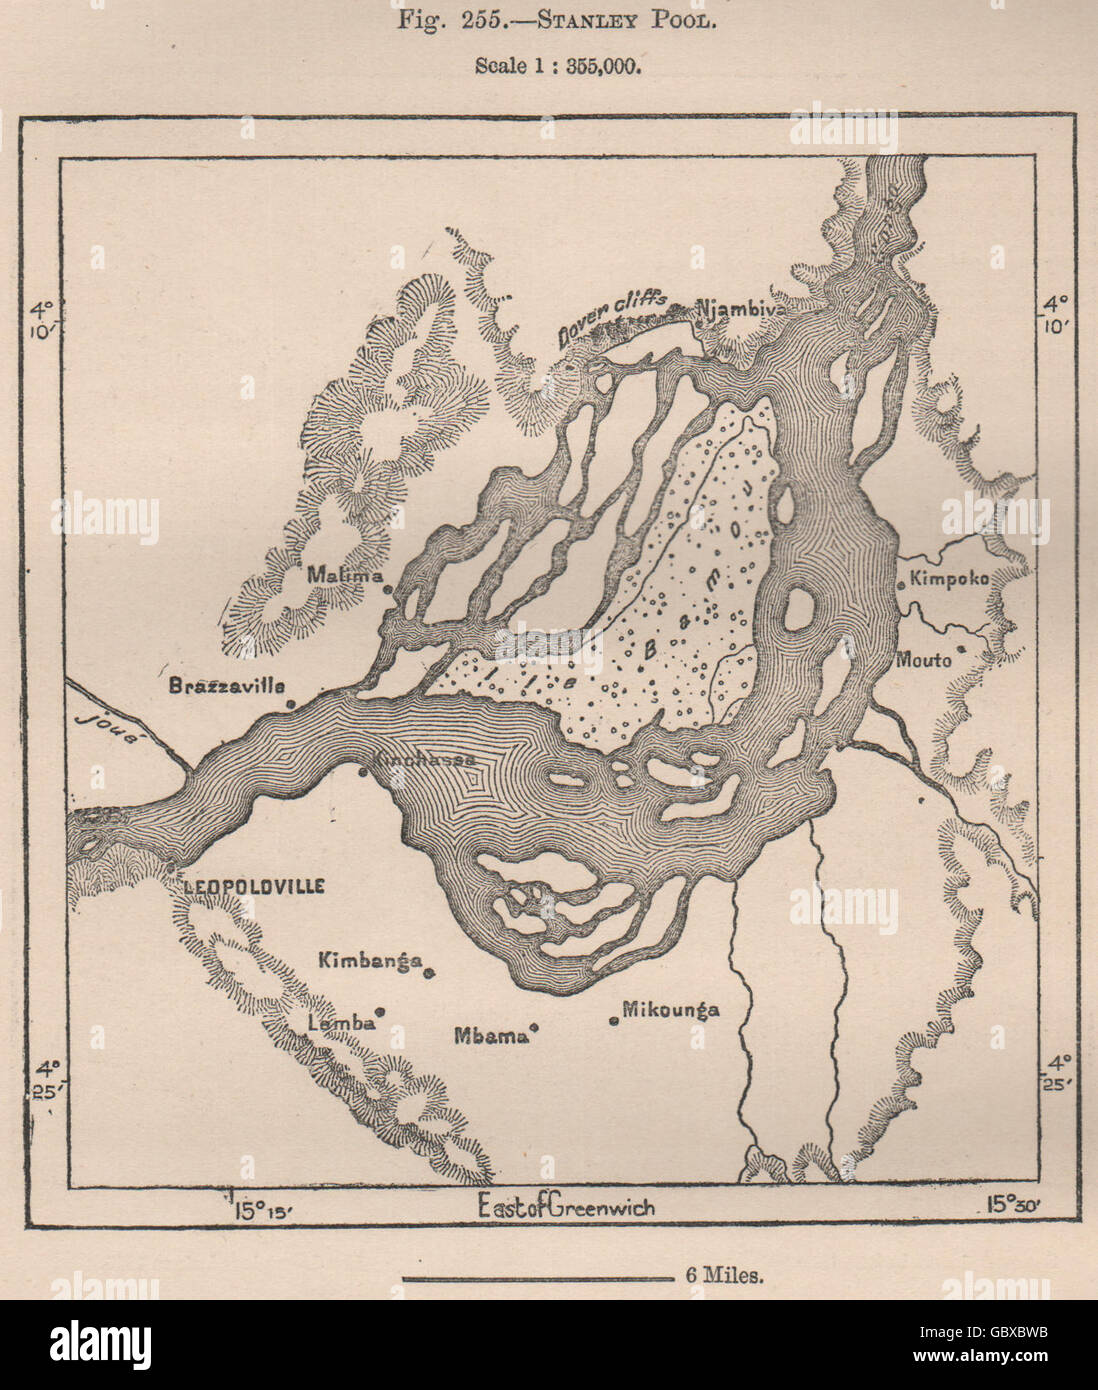 https://c8.alamy.com/comp/GBXBWB/stanley-pool-pool-malebo-congo-congo-basin-1885-antique-map-GBXBWB.jpg